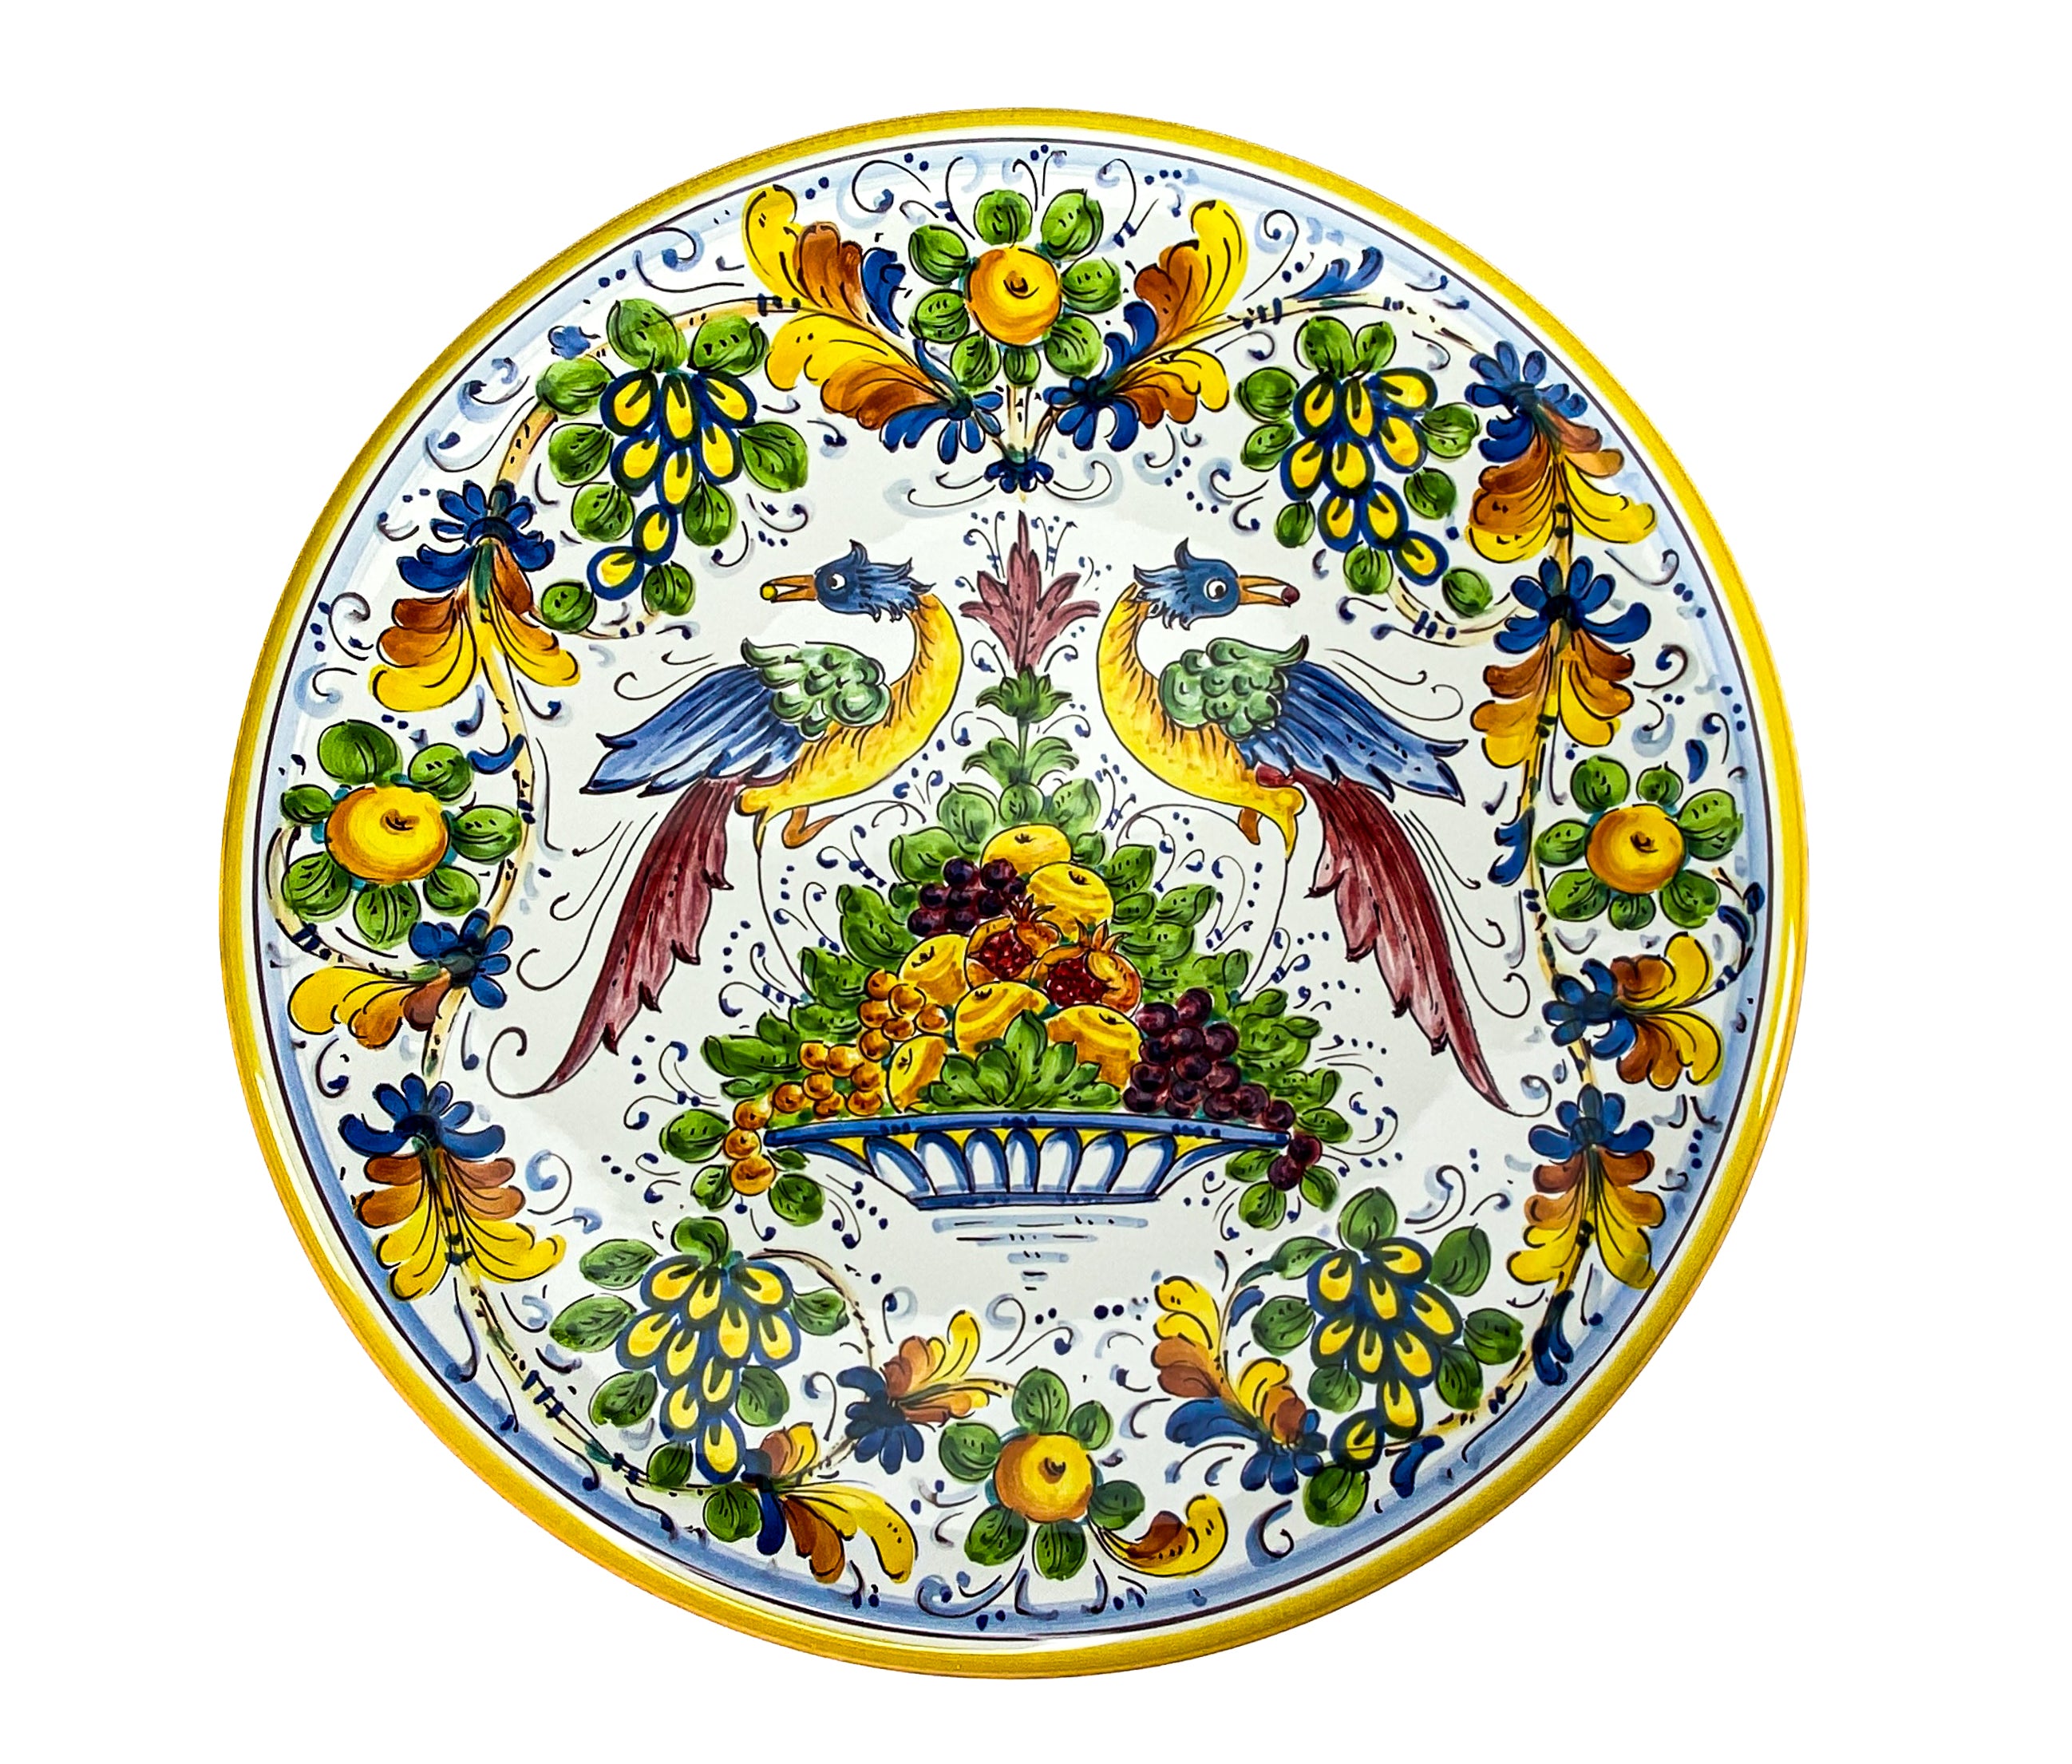 Borgioli - Birds of Paradise Round Platter 40cm (15.75")